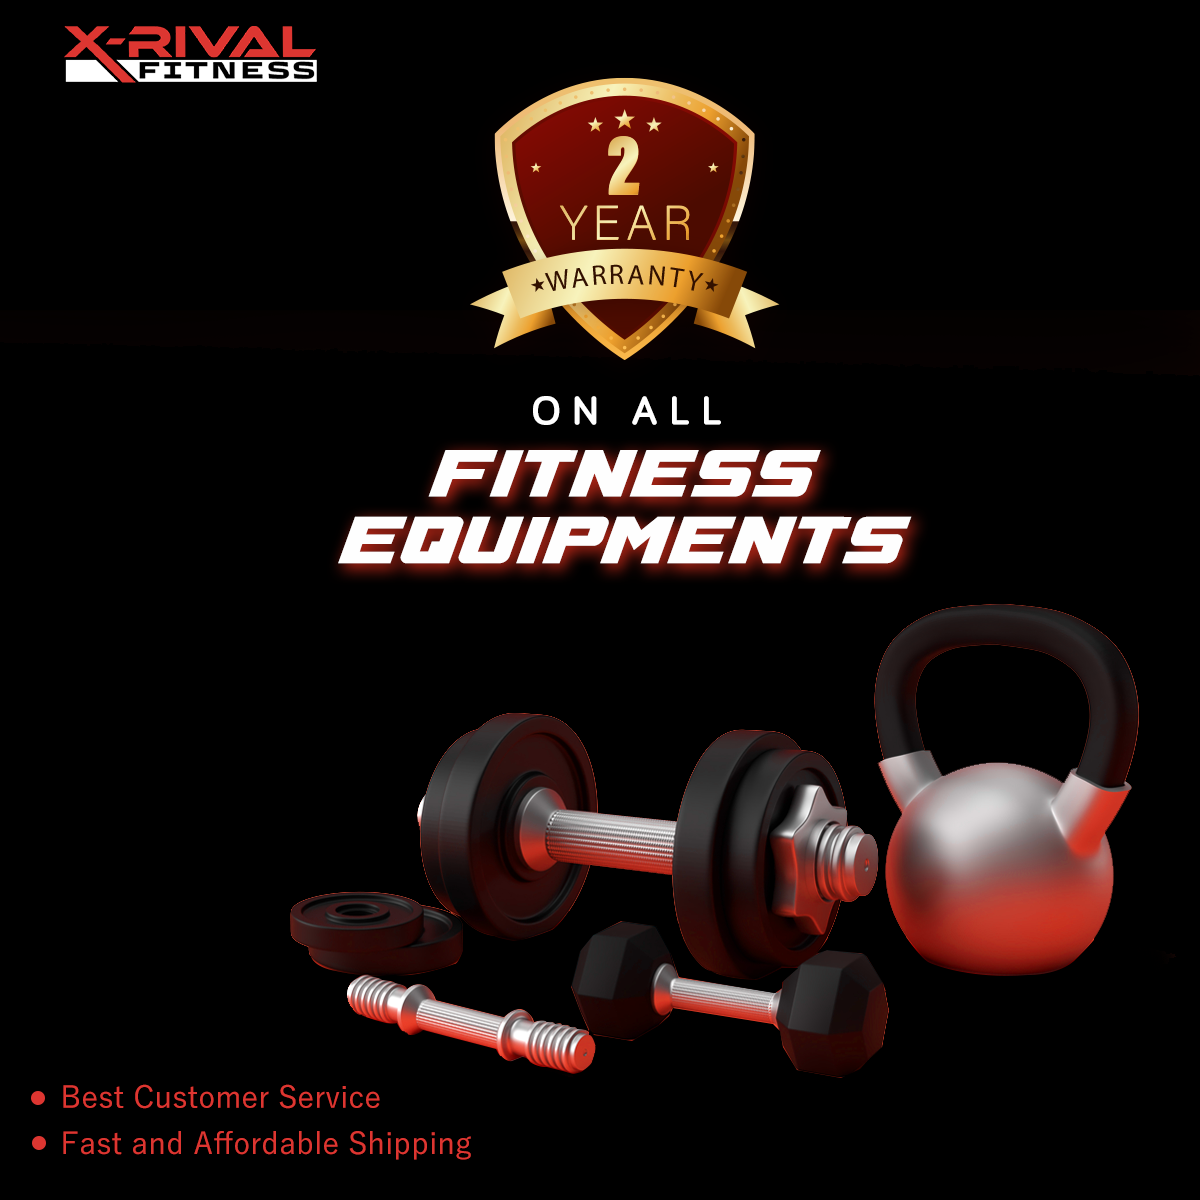 Fitness & Gym Equipment  Extreme Training Equipment